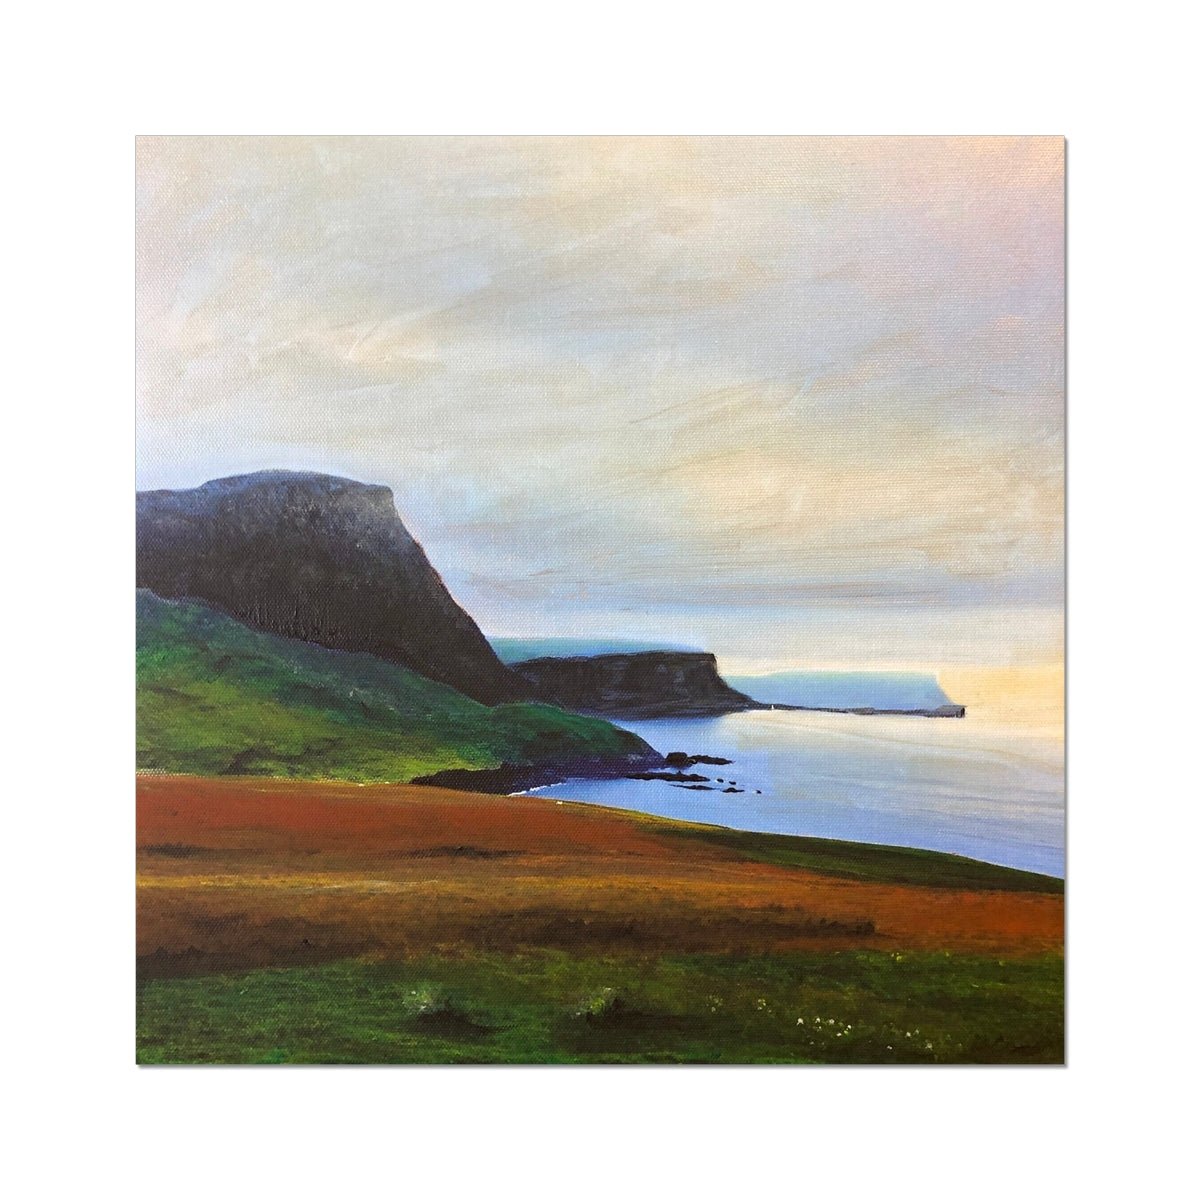 Neist Point Cliffs Skye Painting | Fine Art Prints From Scotland-Unframed Prints-Skye Art Gallery-24"x24"-Paintings, Prints, Homeware, Art Gifts From Scotland By Scottish Artist Kevin Hunter